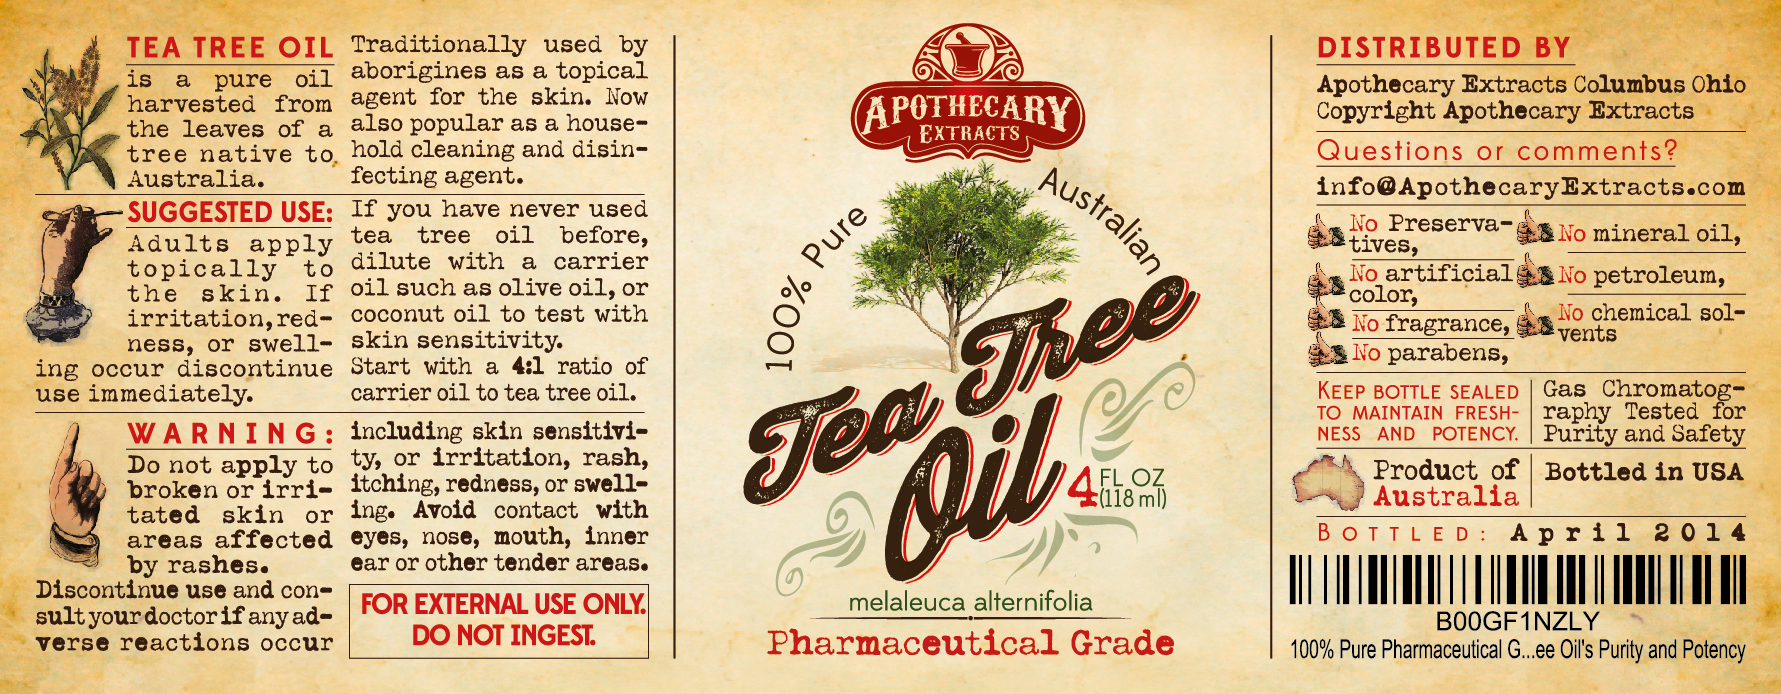 Tea_Tree_Oil_label_info